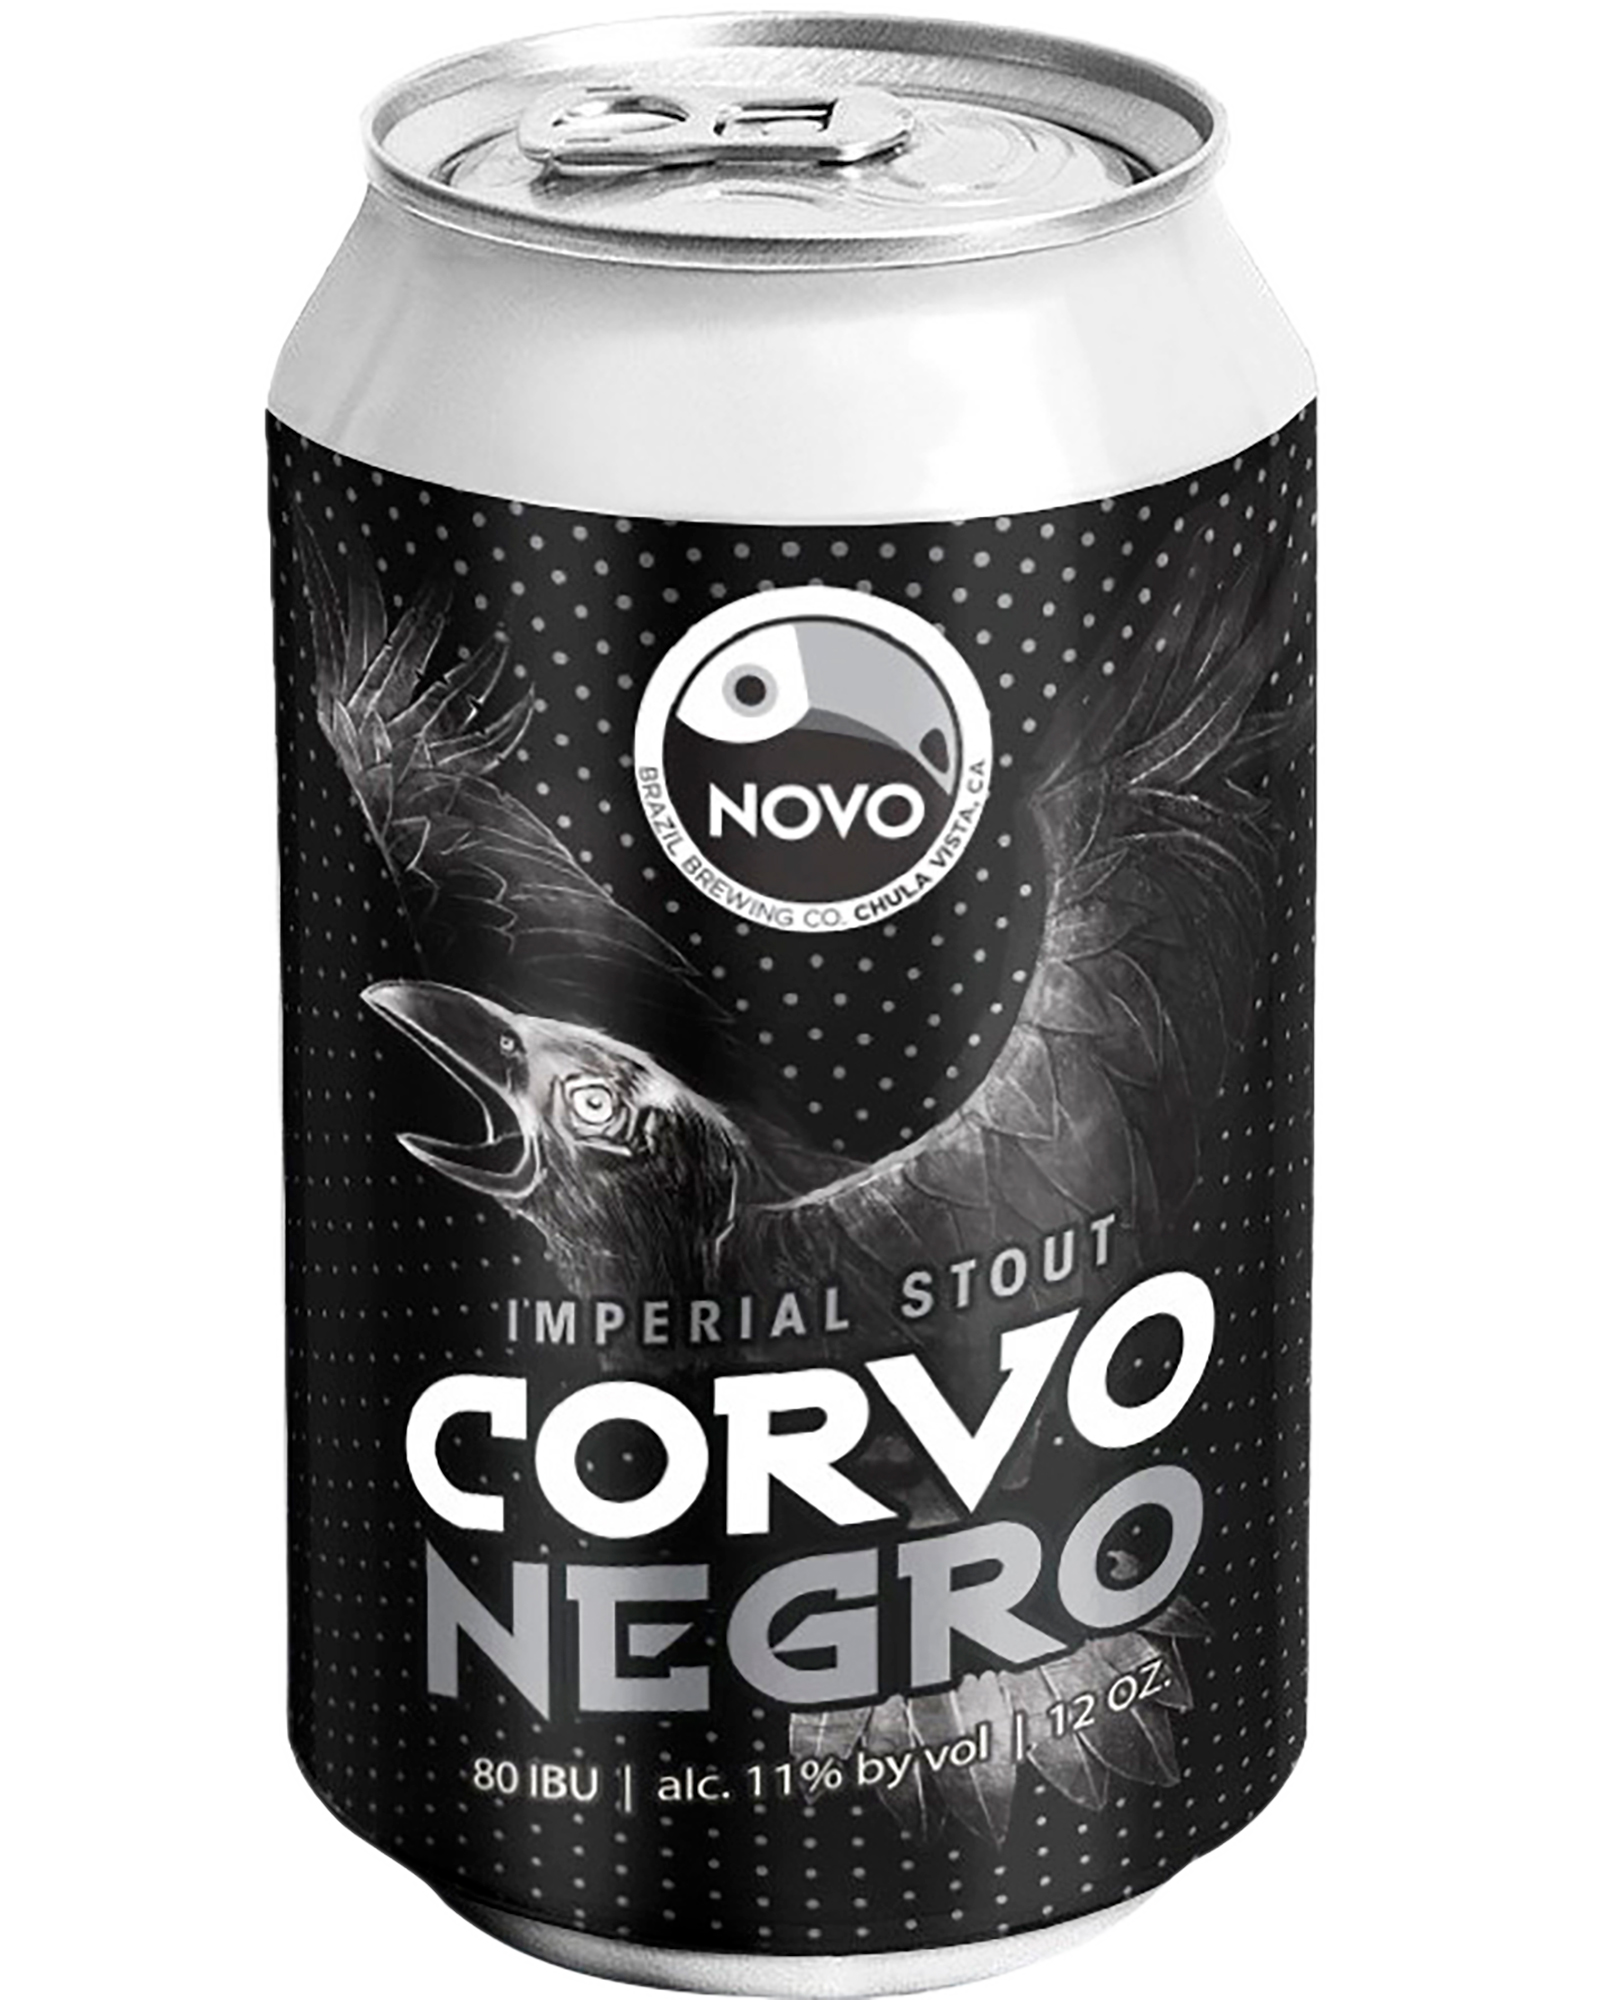 Novo Brazil Corvo Negro Imperial Stout can